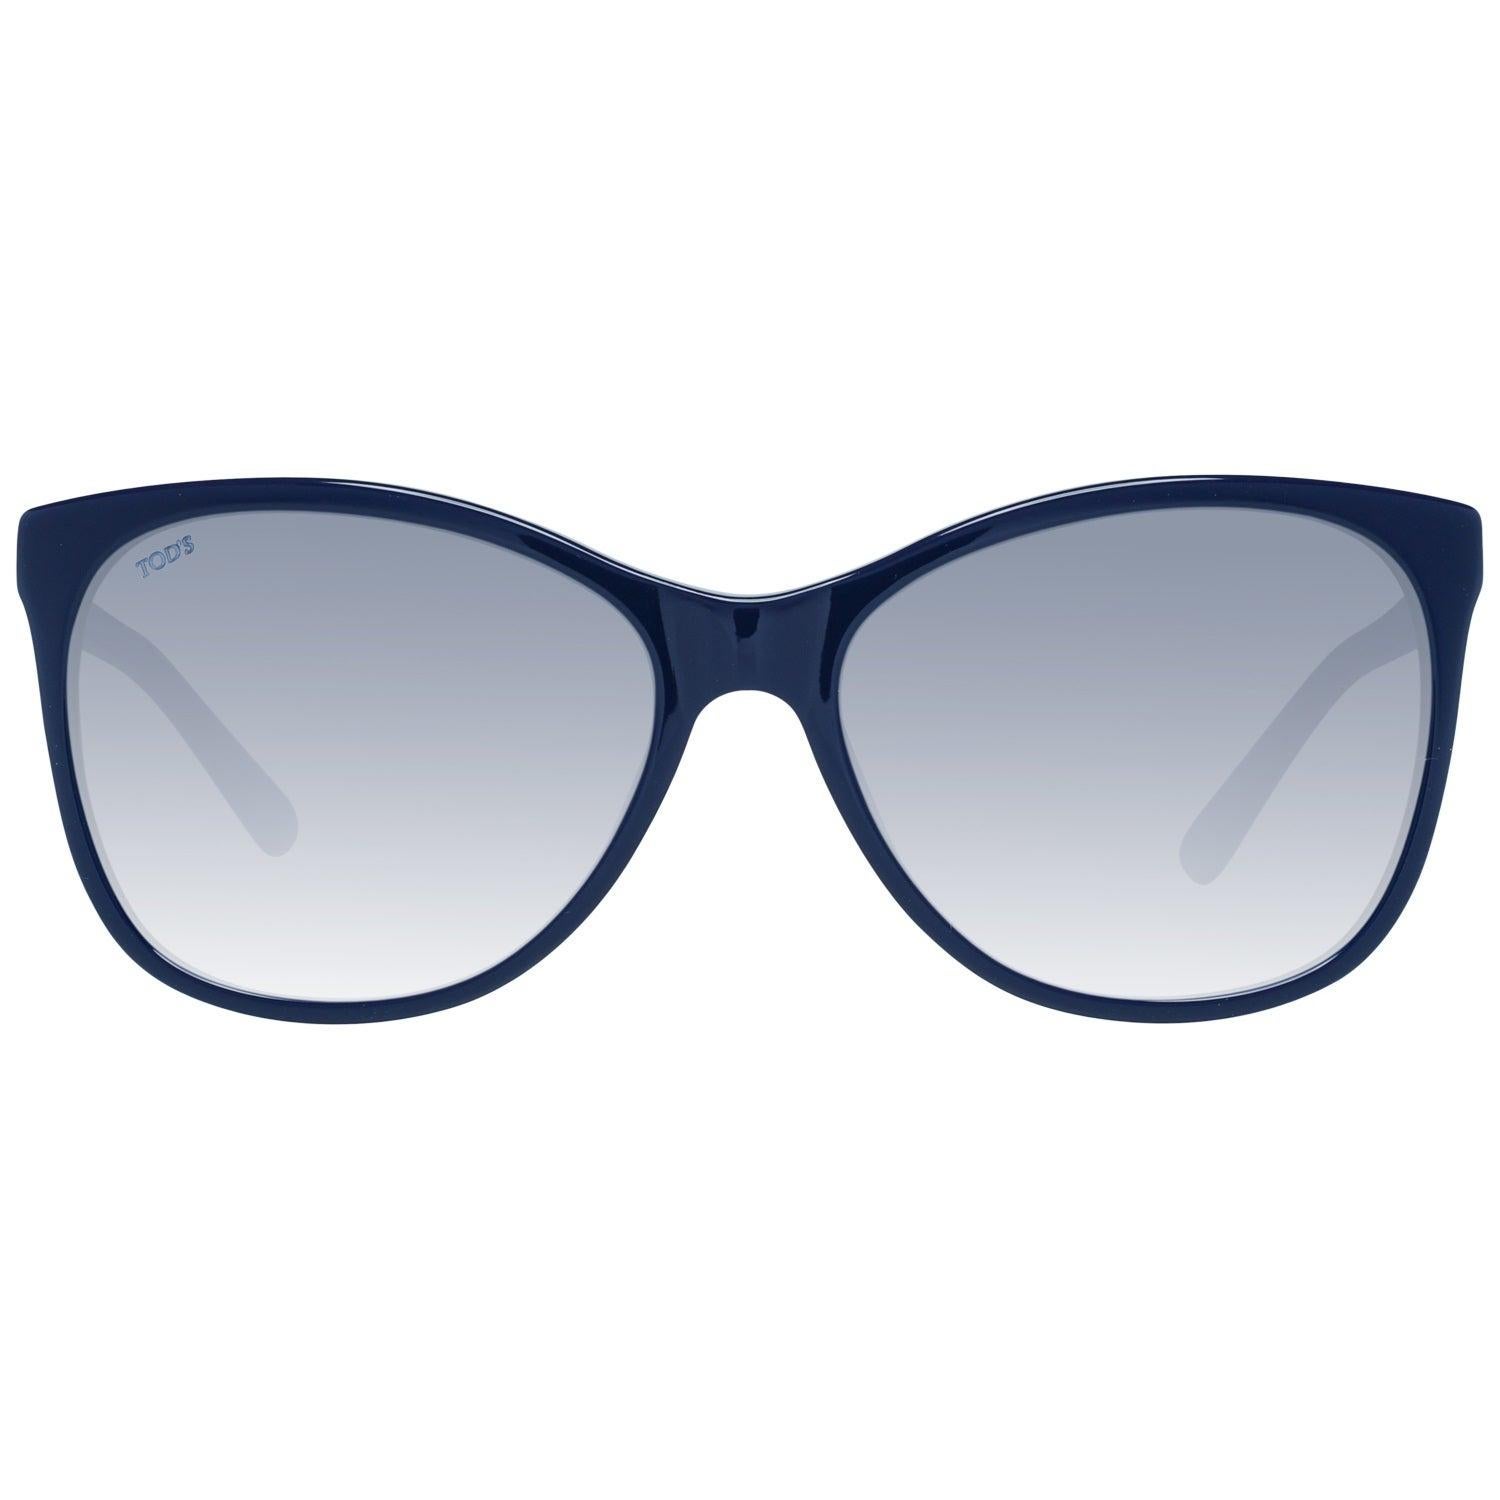 Tod's Mint Women Blue Sunglasses TO0175 5790W 57-16-139 mm